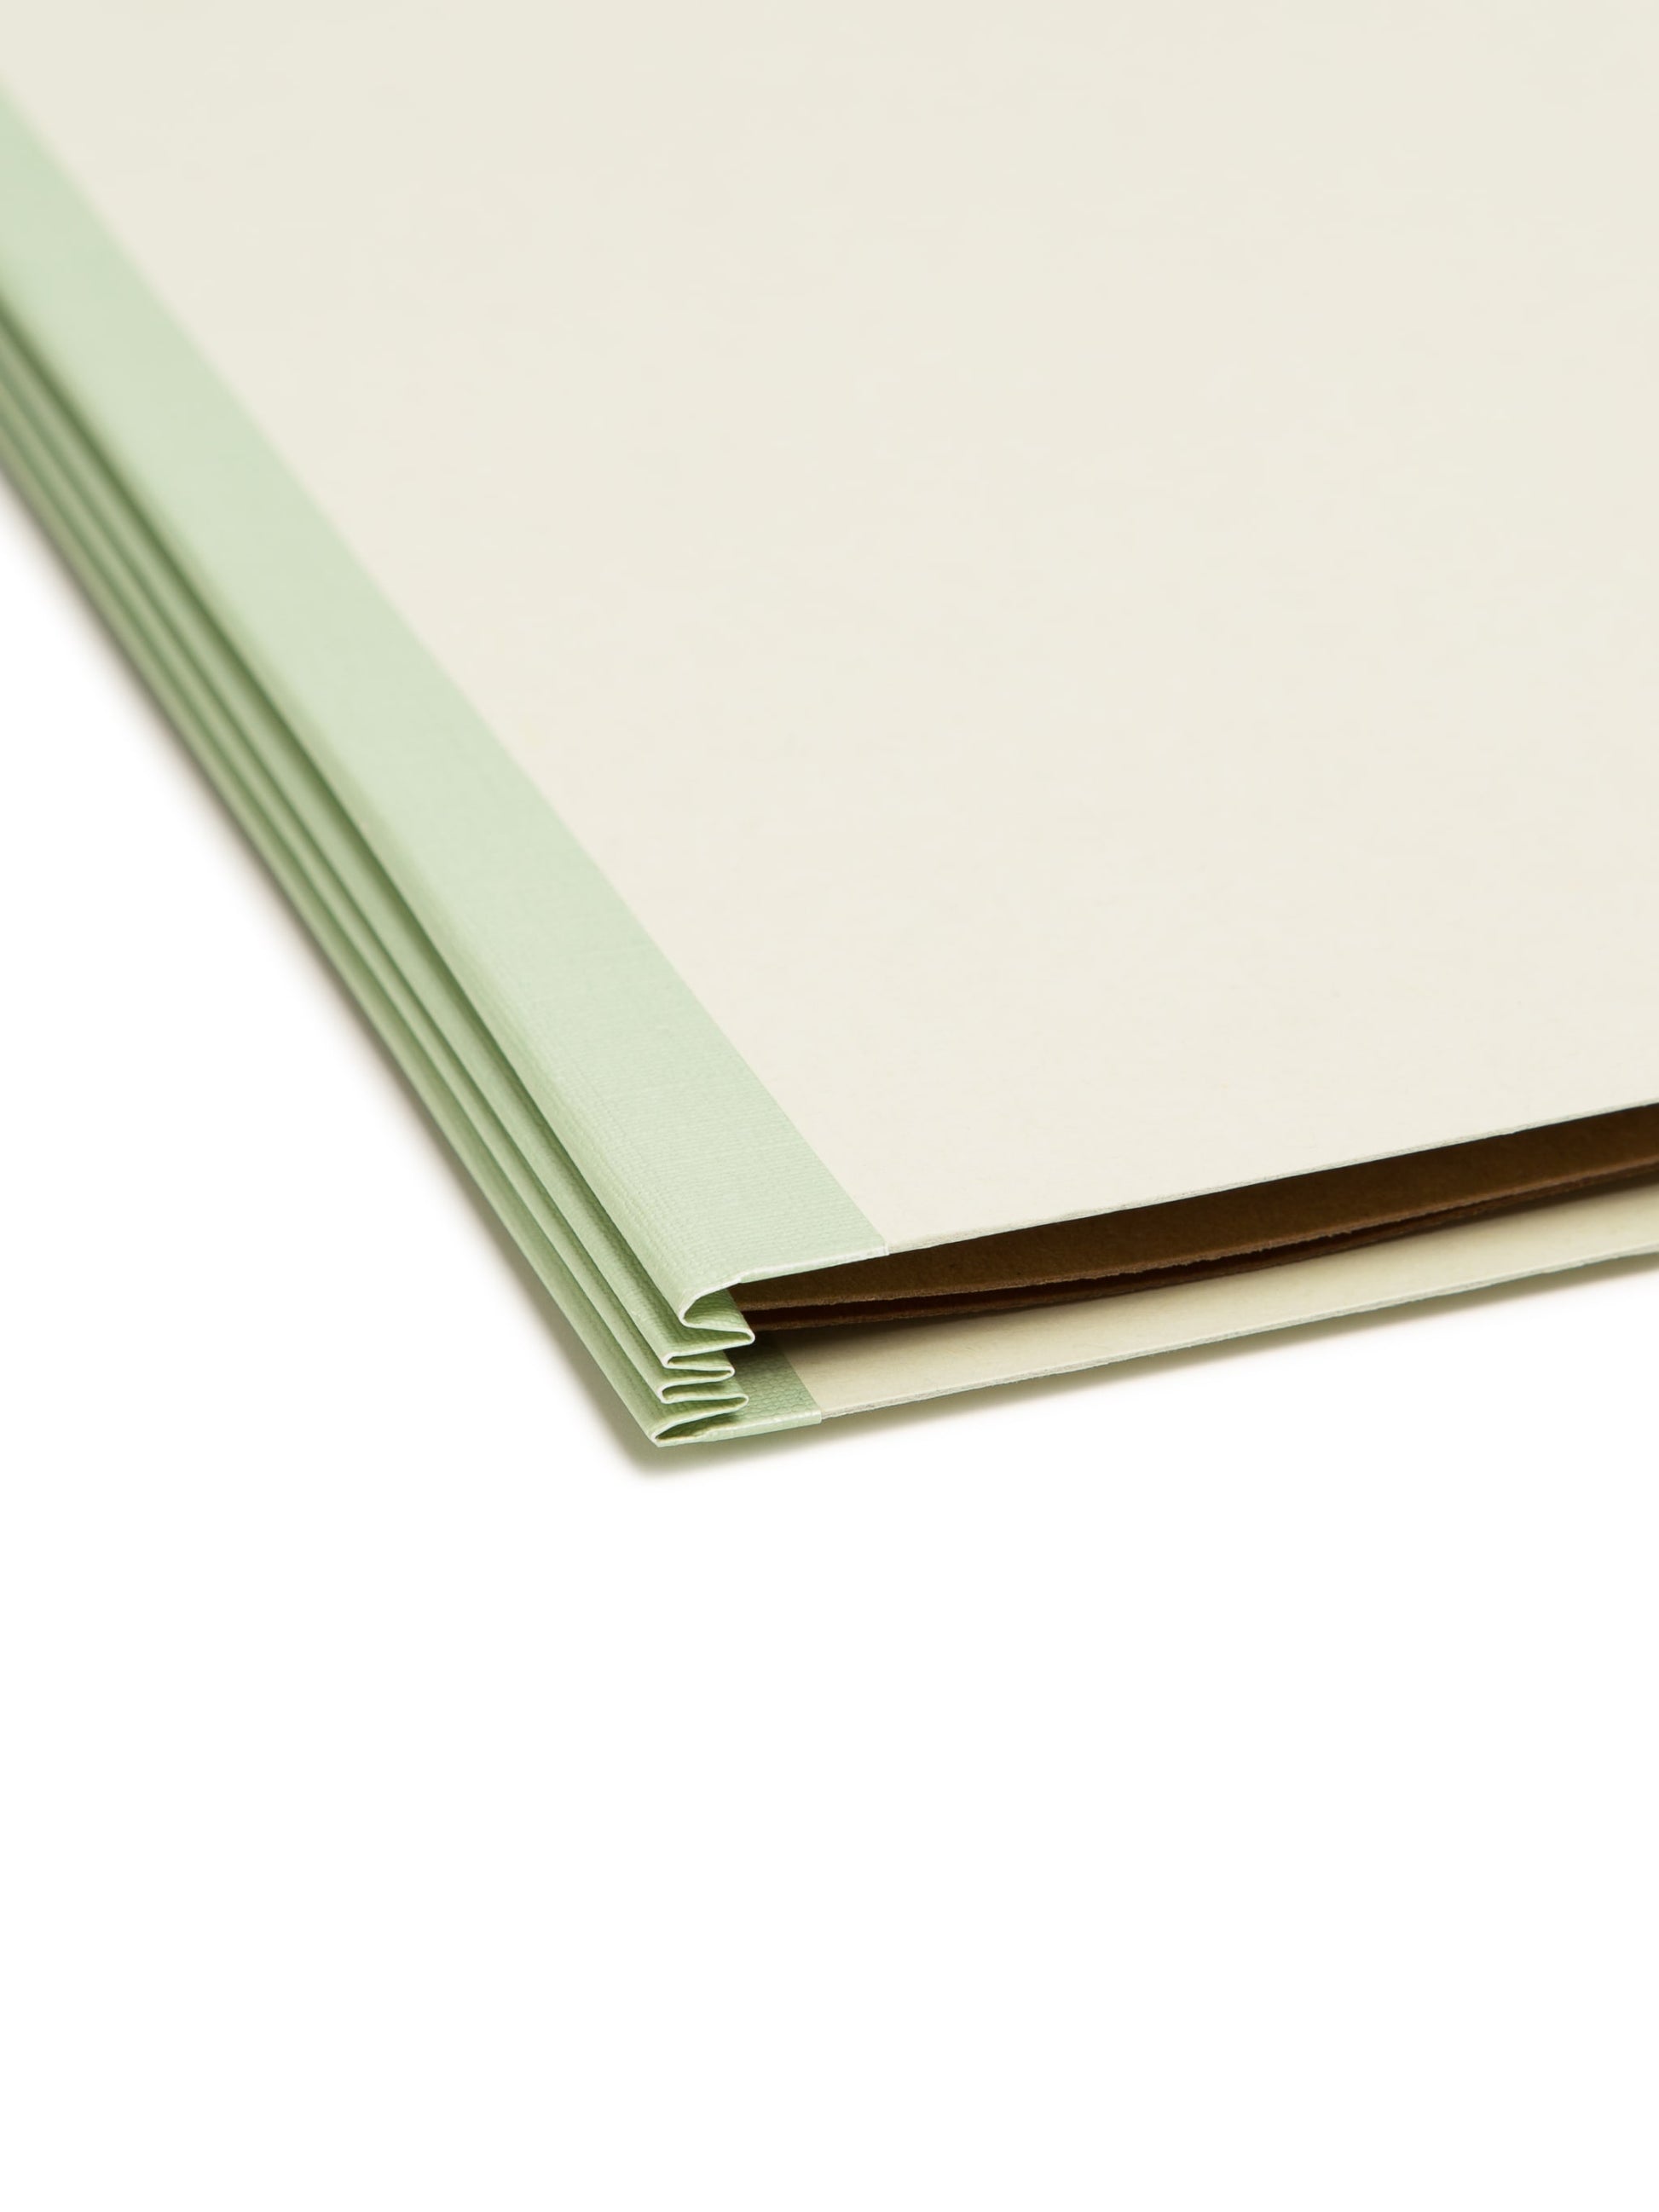 Pressboard Classification File Folders, 1 Divider, 2 inch Expansion, Gray/Green Color, Letter Size, Set of 0, 30086486137233